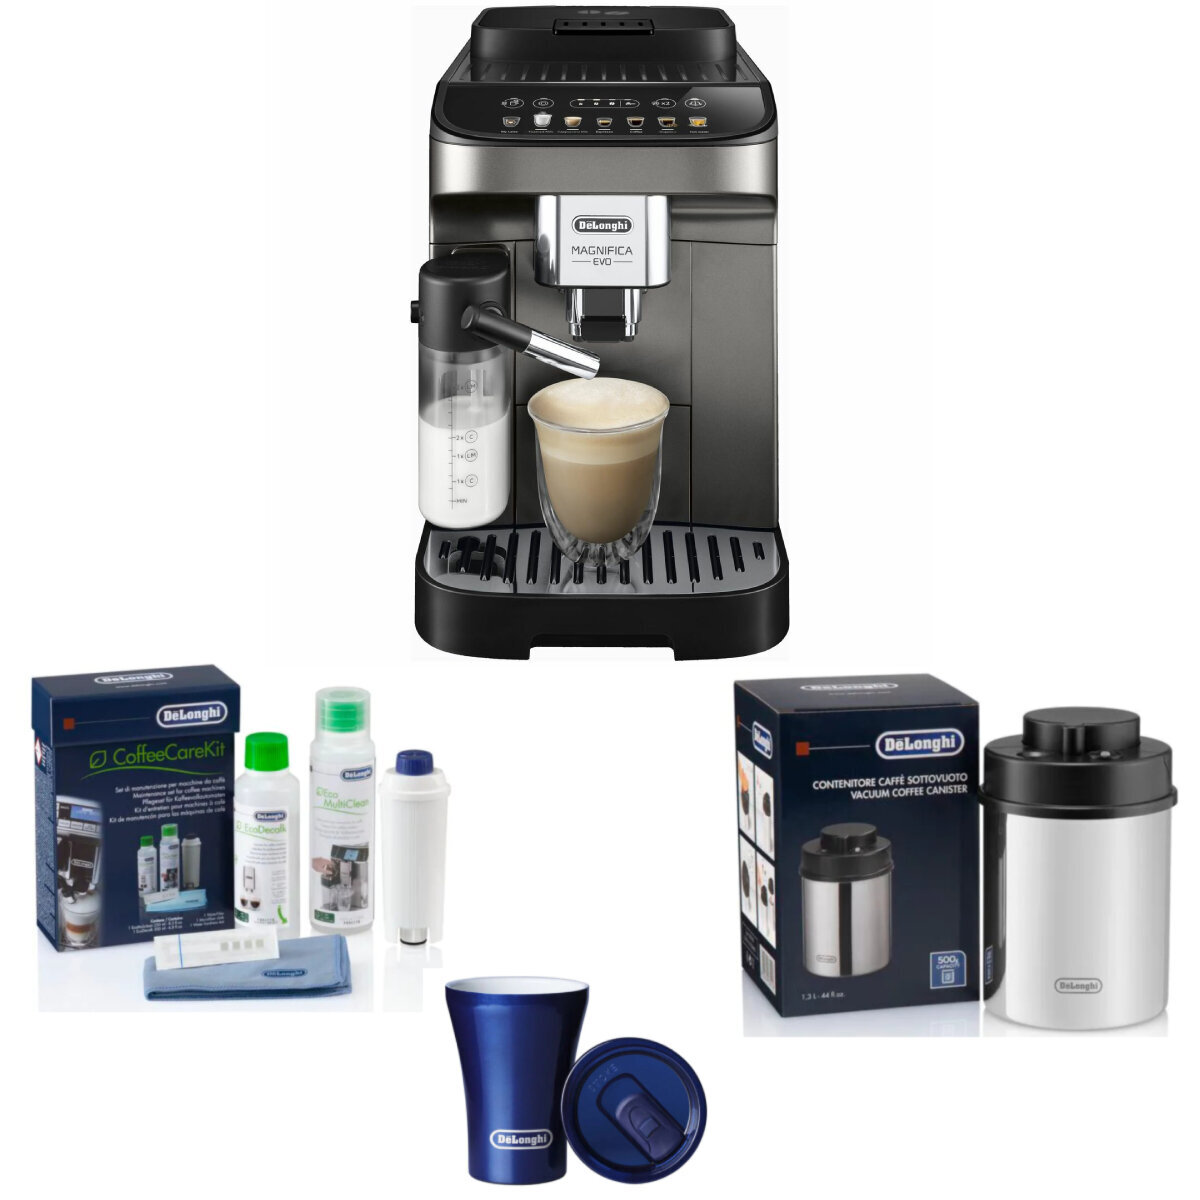 Buy DeLonghi Magnifica Evo Titan ECAM29083TB, Automatic Coffee Machine,  Titanium Black